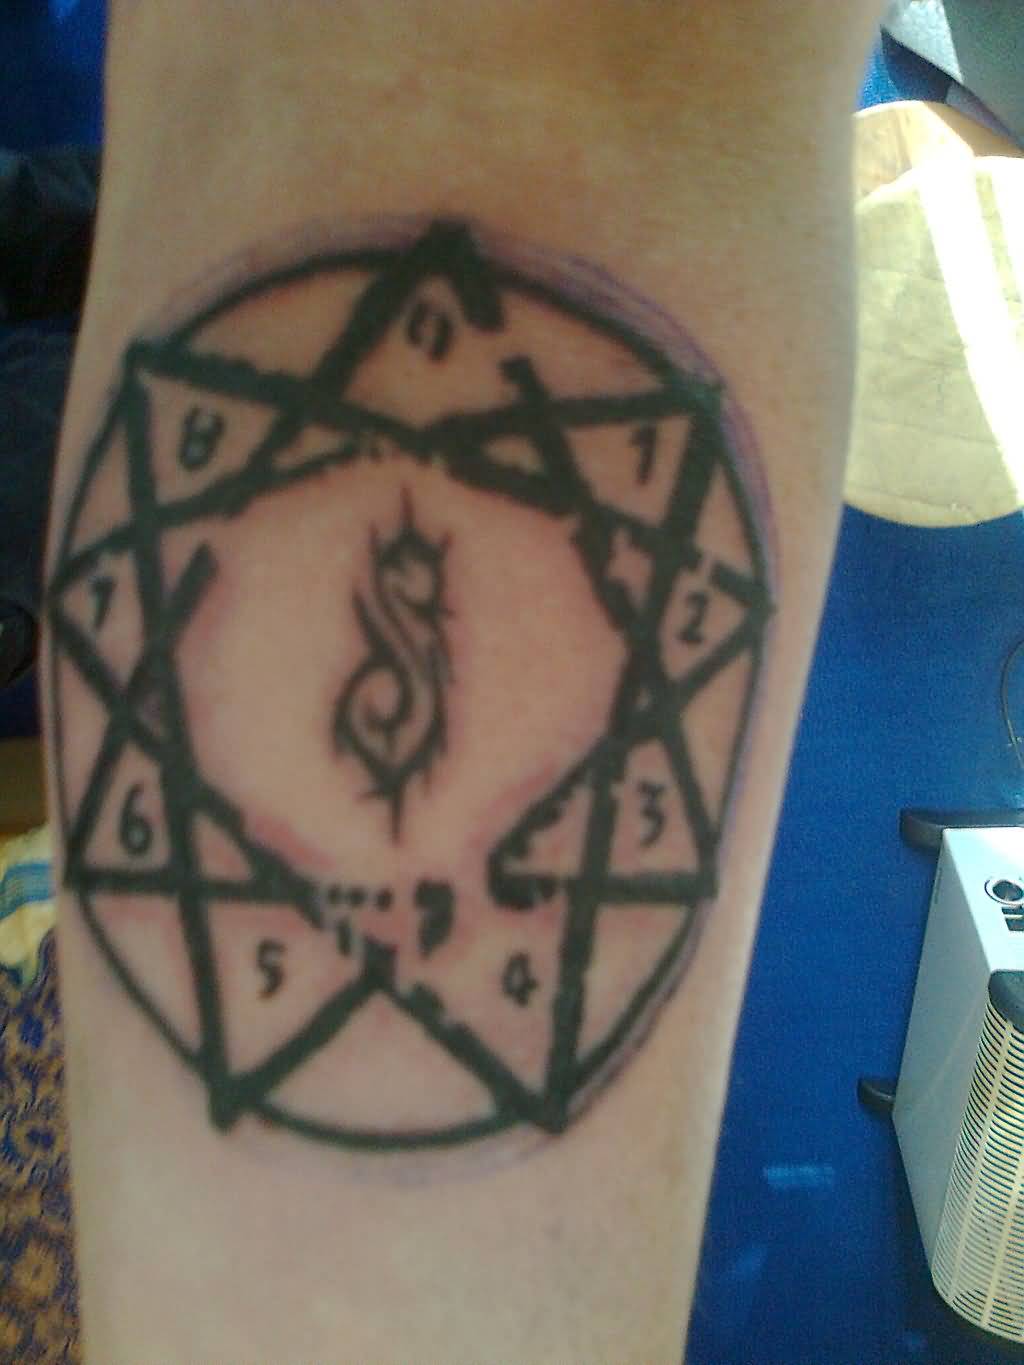 Slipknot Logo With Star Tattoo On Forearm